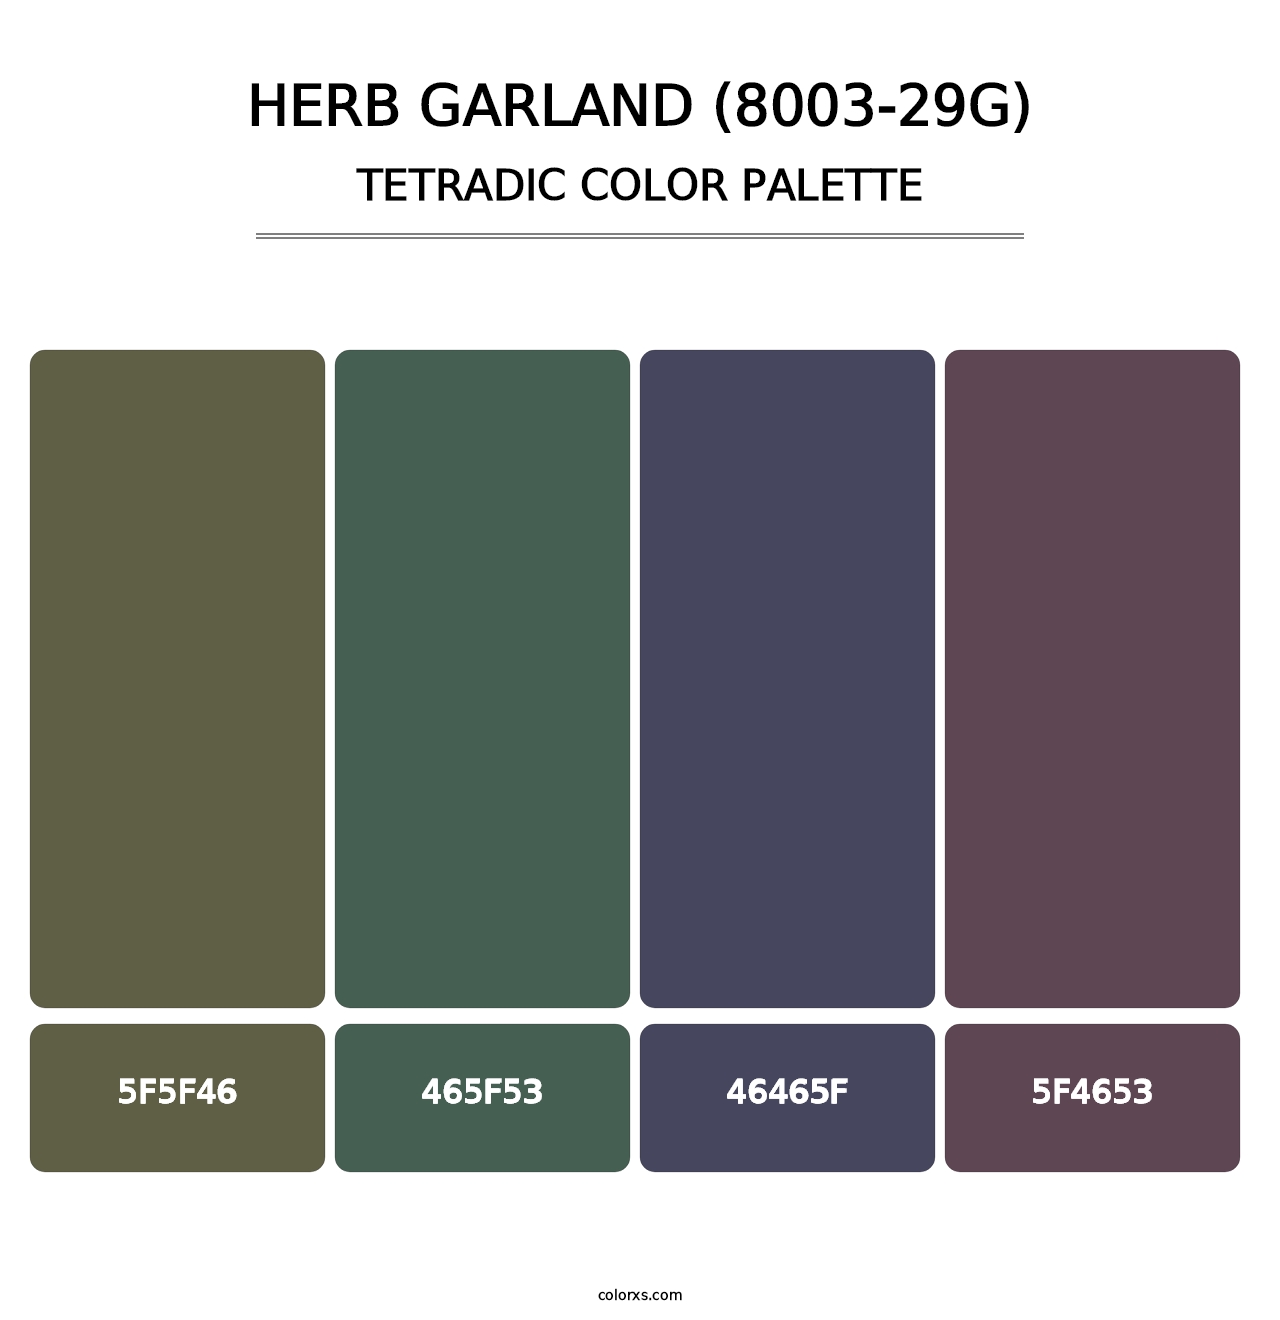 Herb Garland (8003-29G) - Tetradic Color Palette